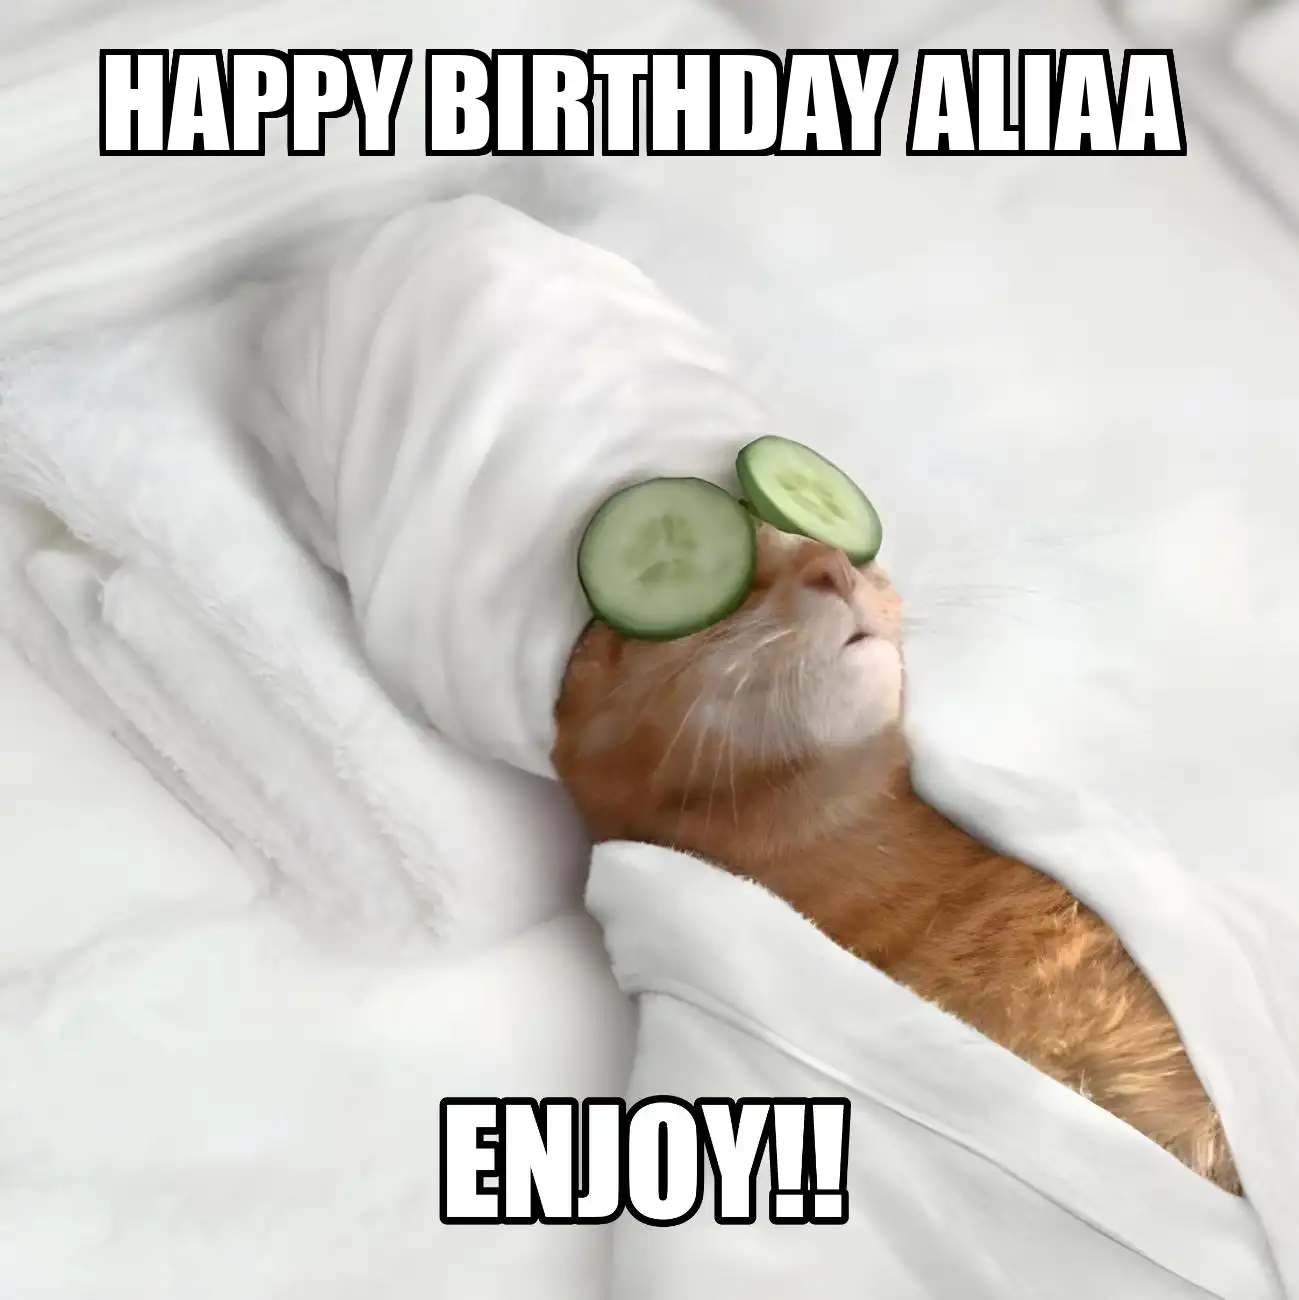 Happy Birthday Aliaa Enjoy Cat Meme